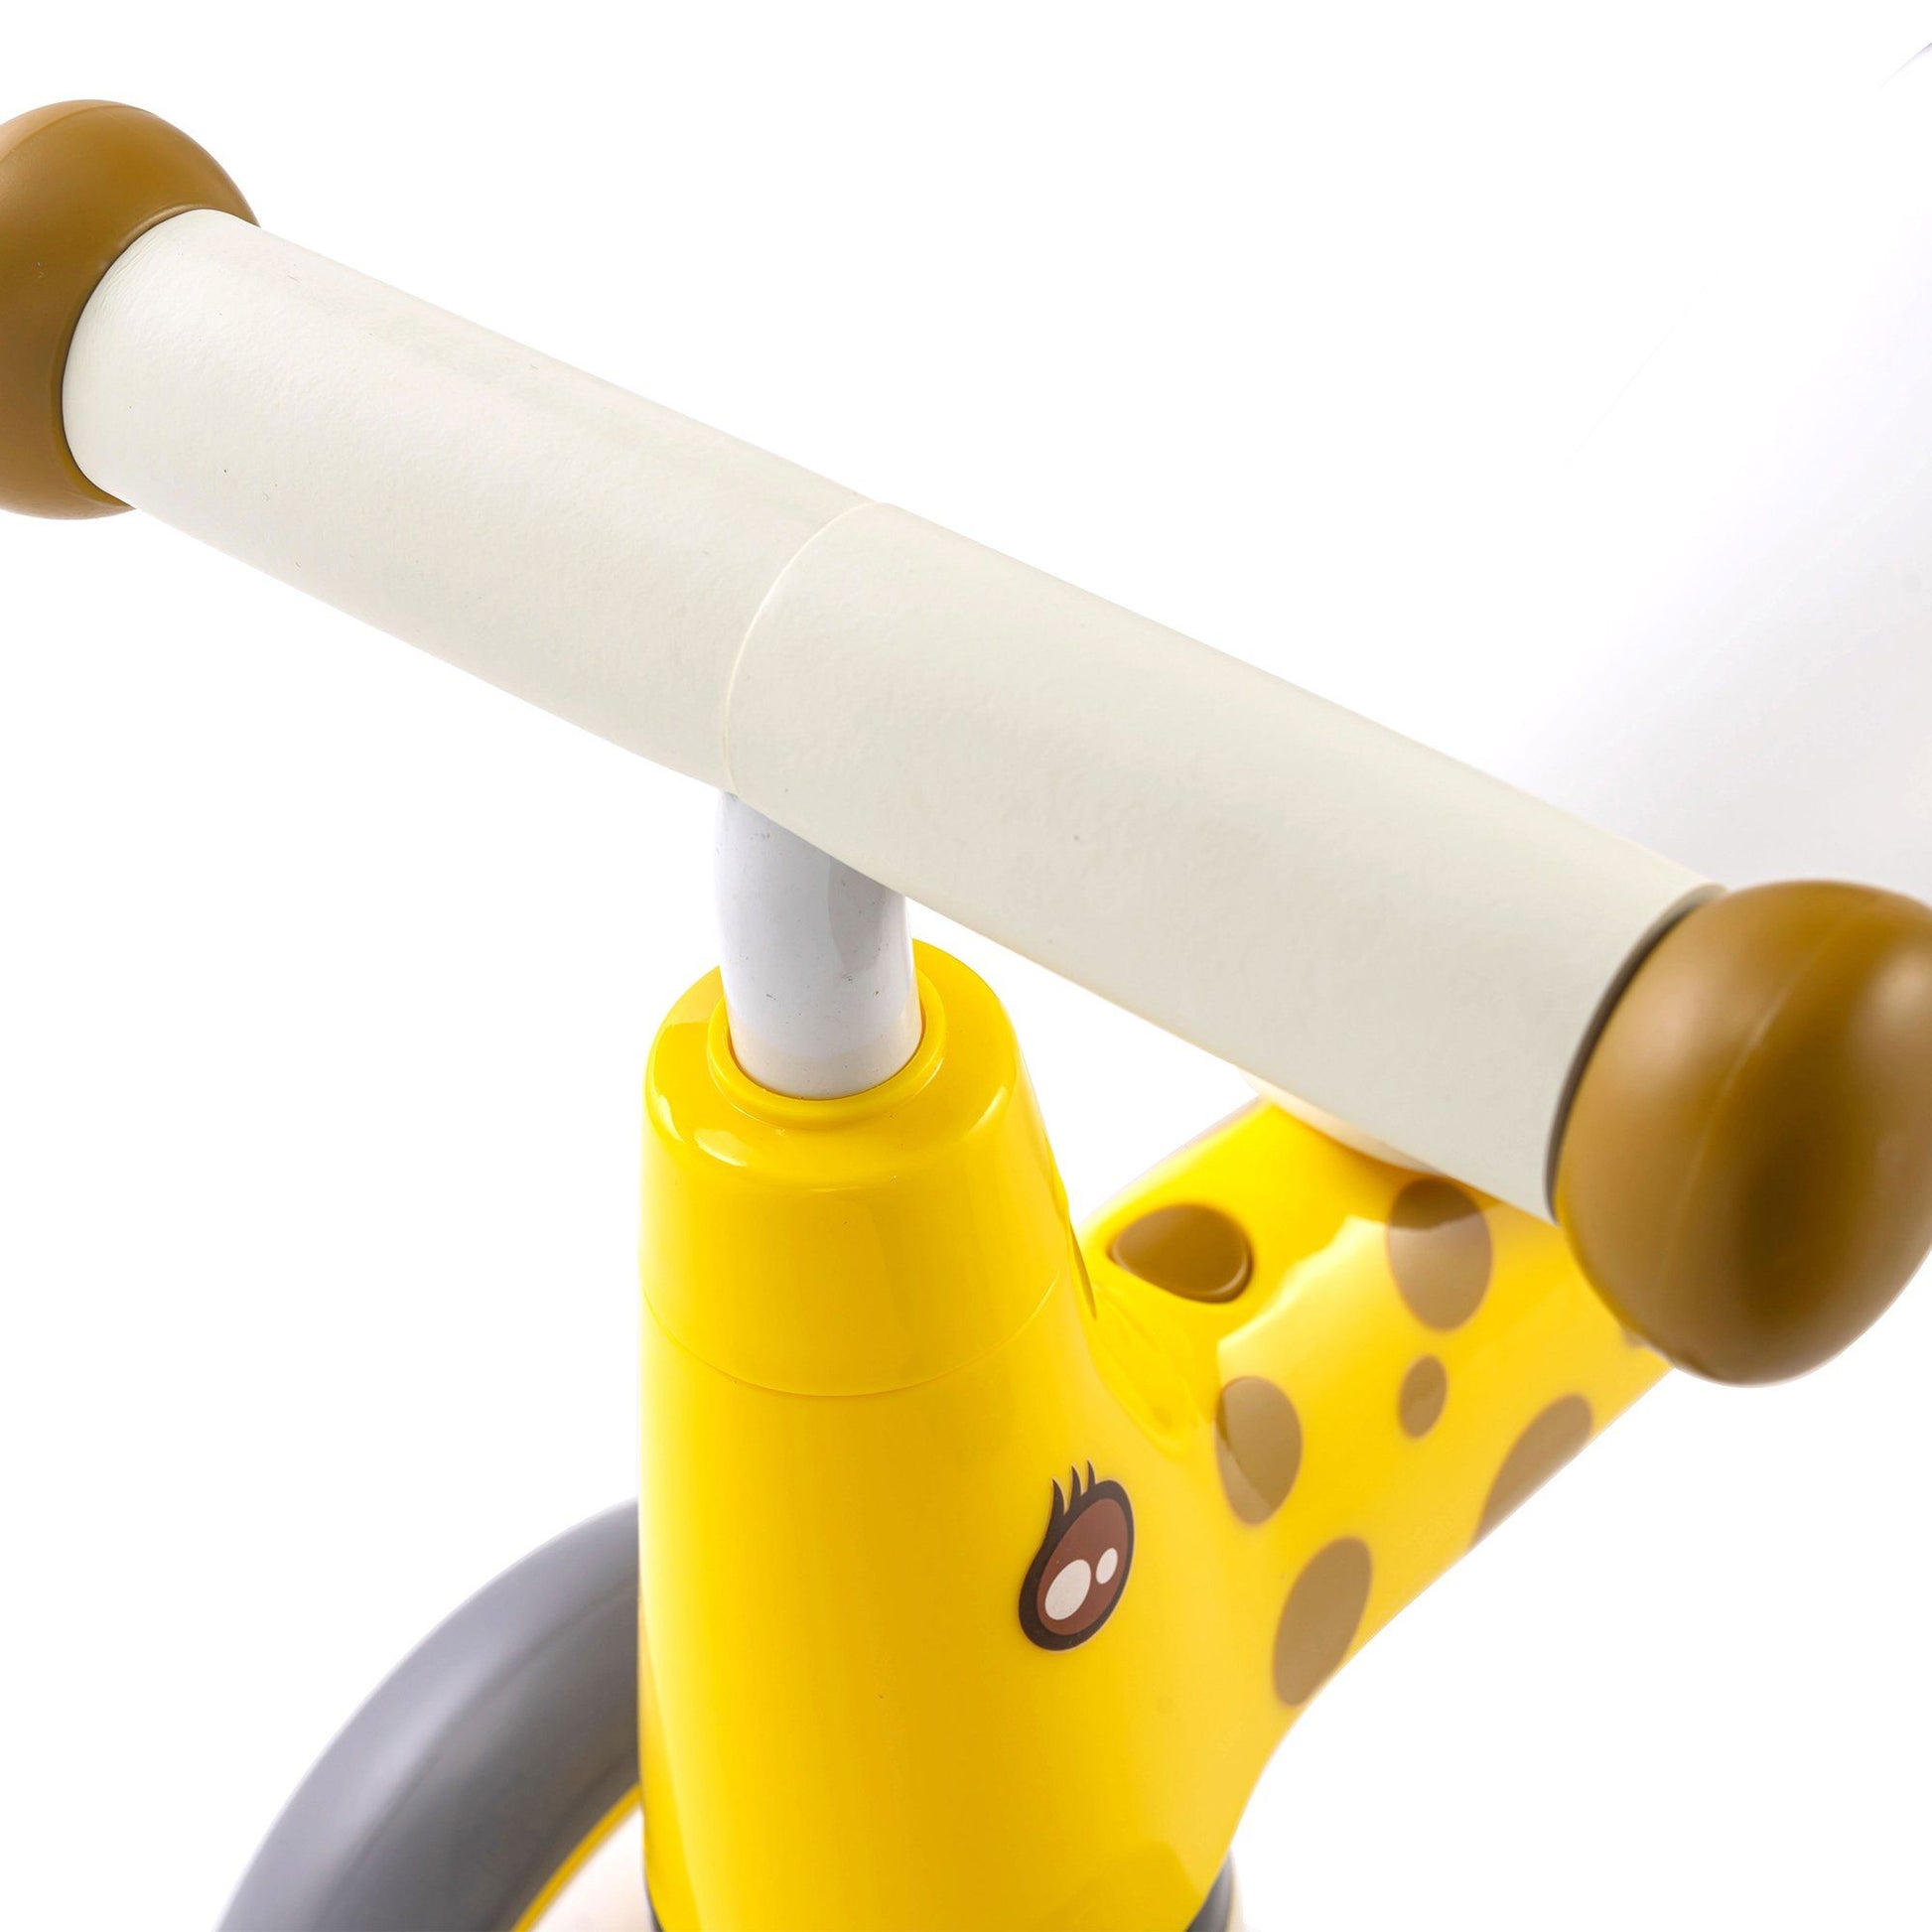 Freddo Toys | Freddo Toys 3 Wheel Balance Bike for Kids